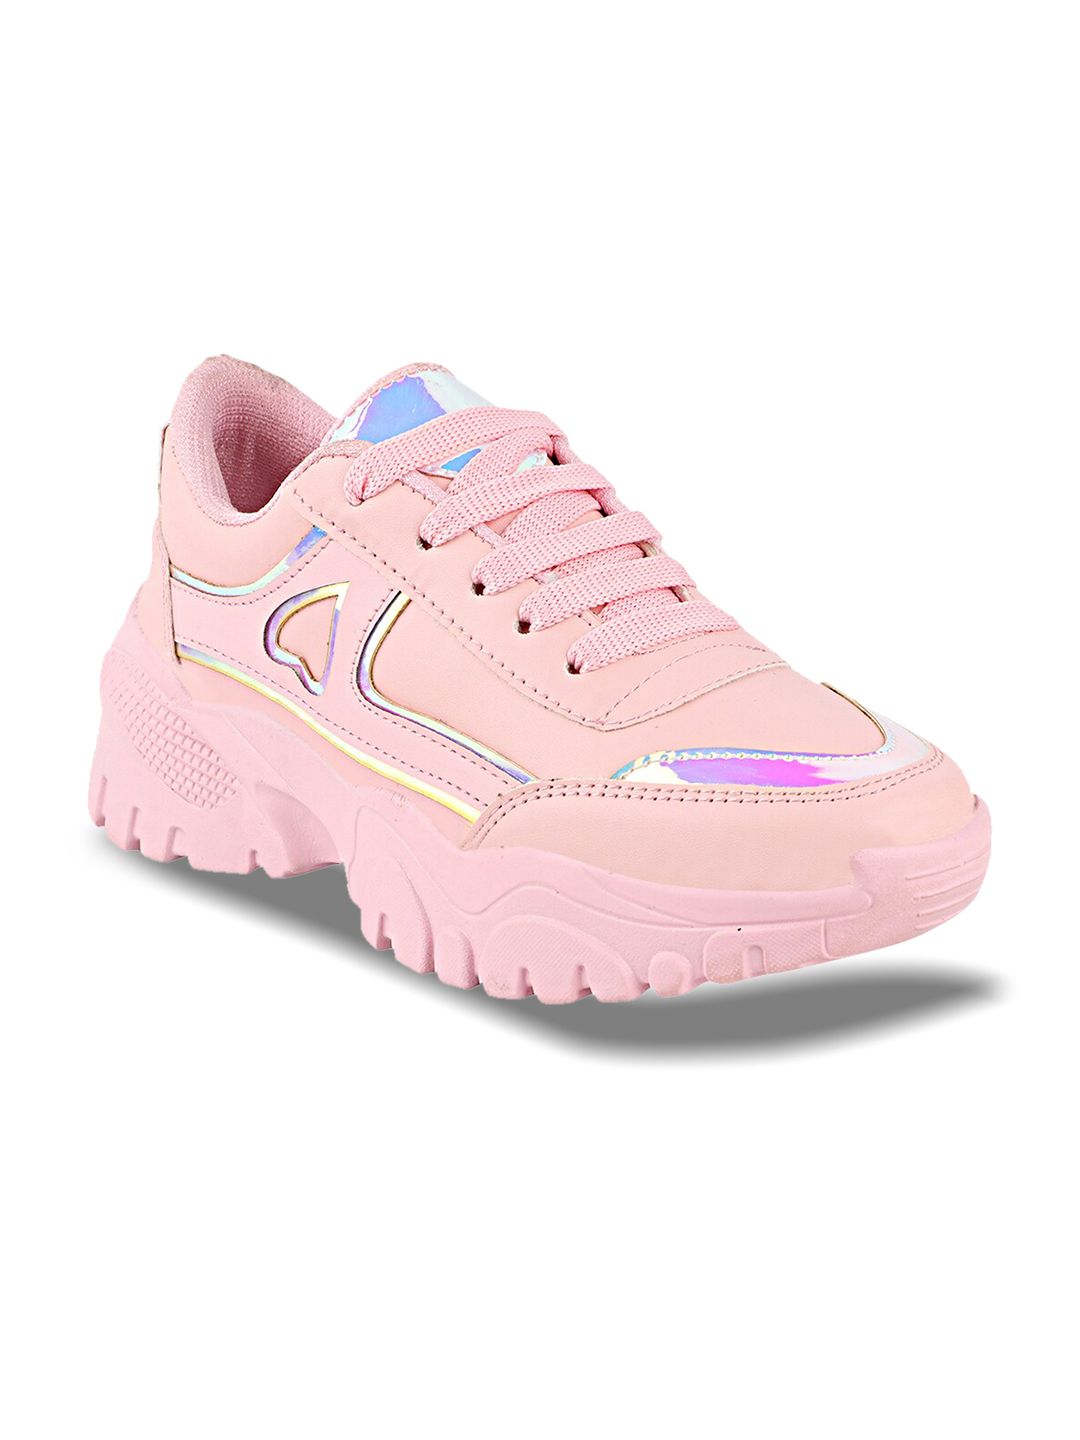 Shoetopia Women Pink Mesh Walking Non-Marking Shoes Price in India